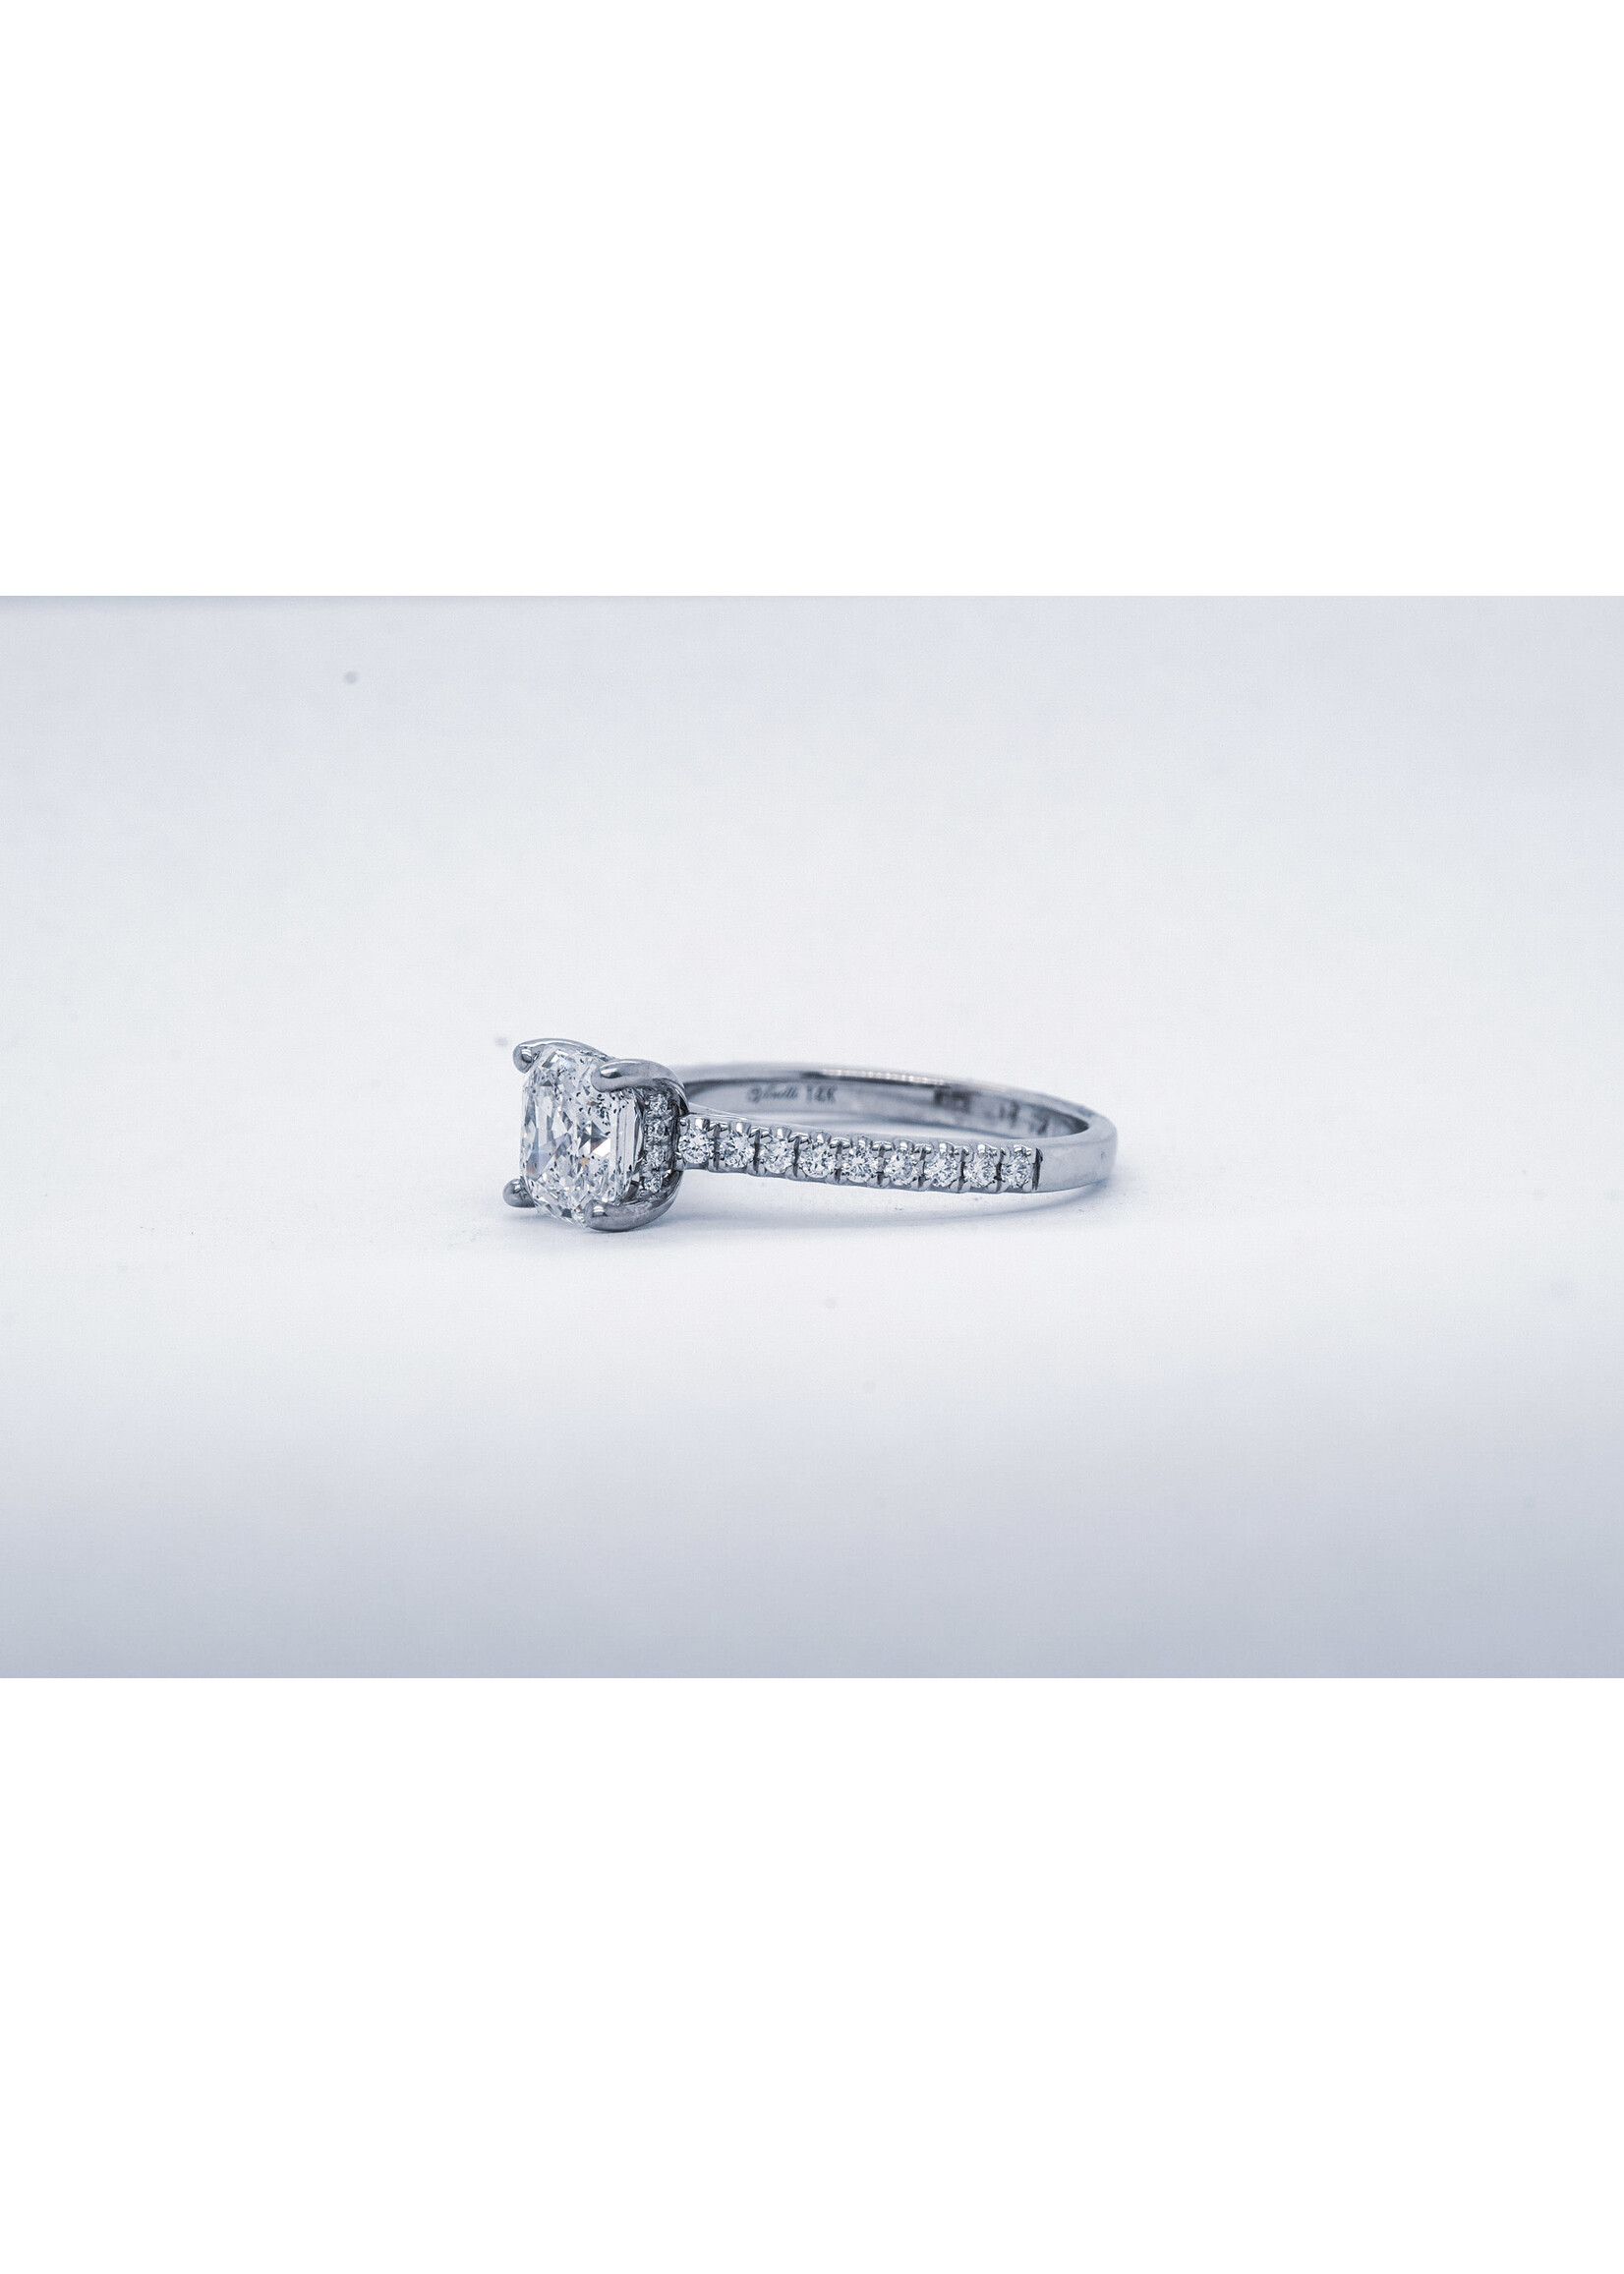 14KW 2.96g Venetti 1.81ctw (1.51ctr) Diamond Hidden Halo Engagement Ring (size 6.5)